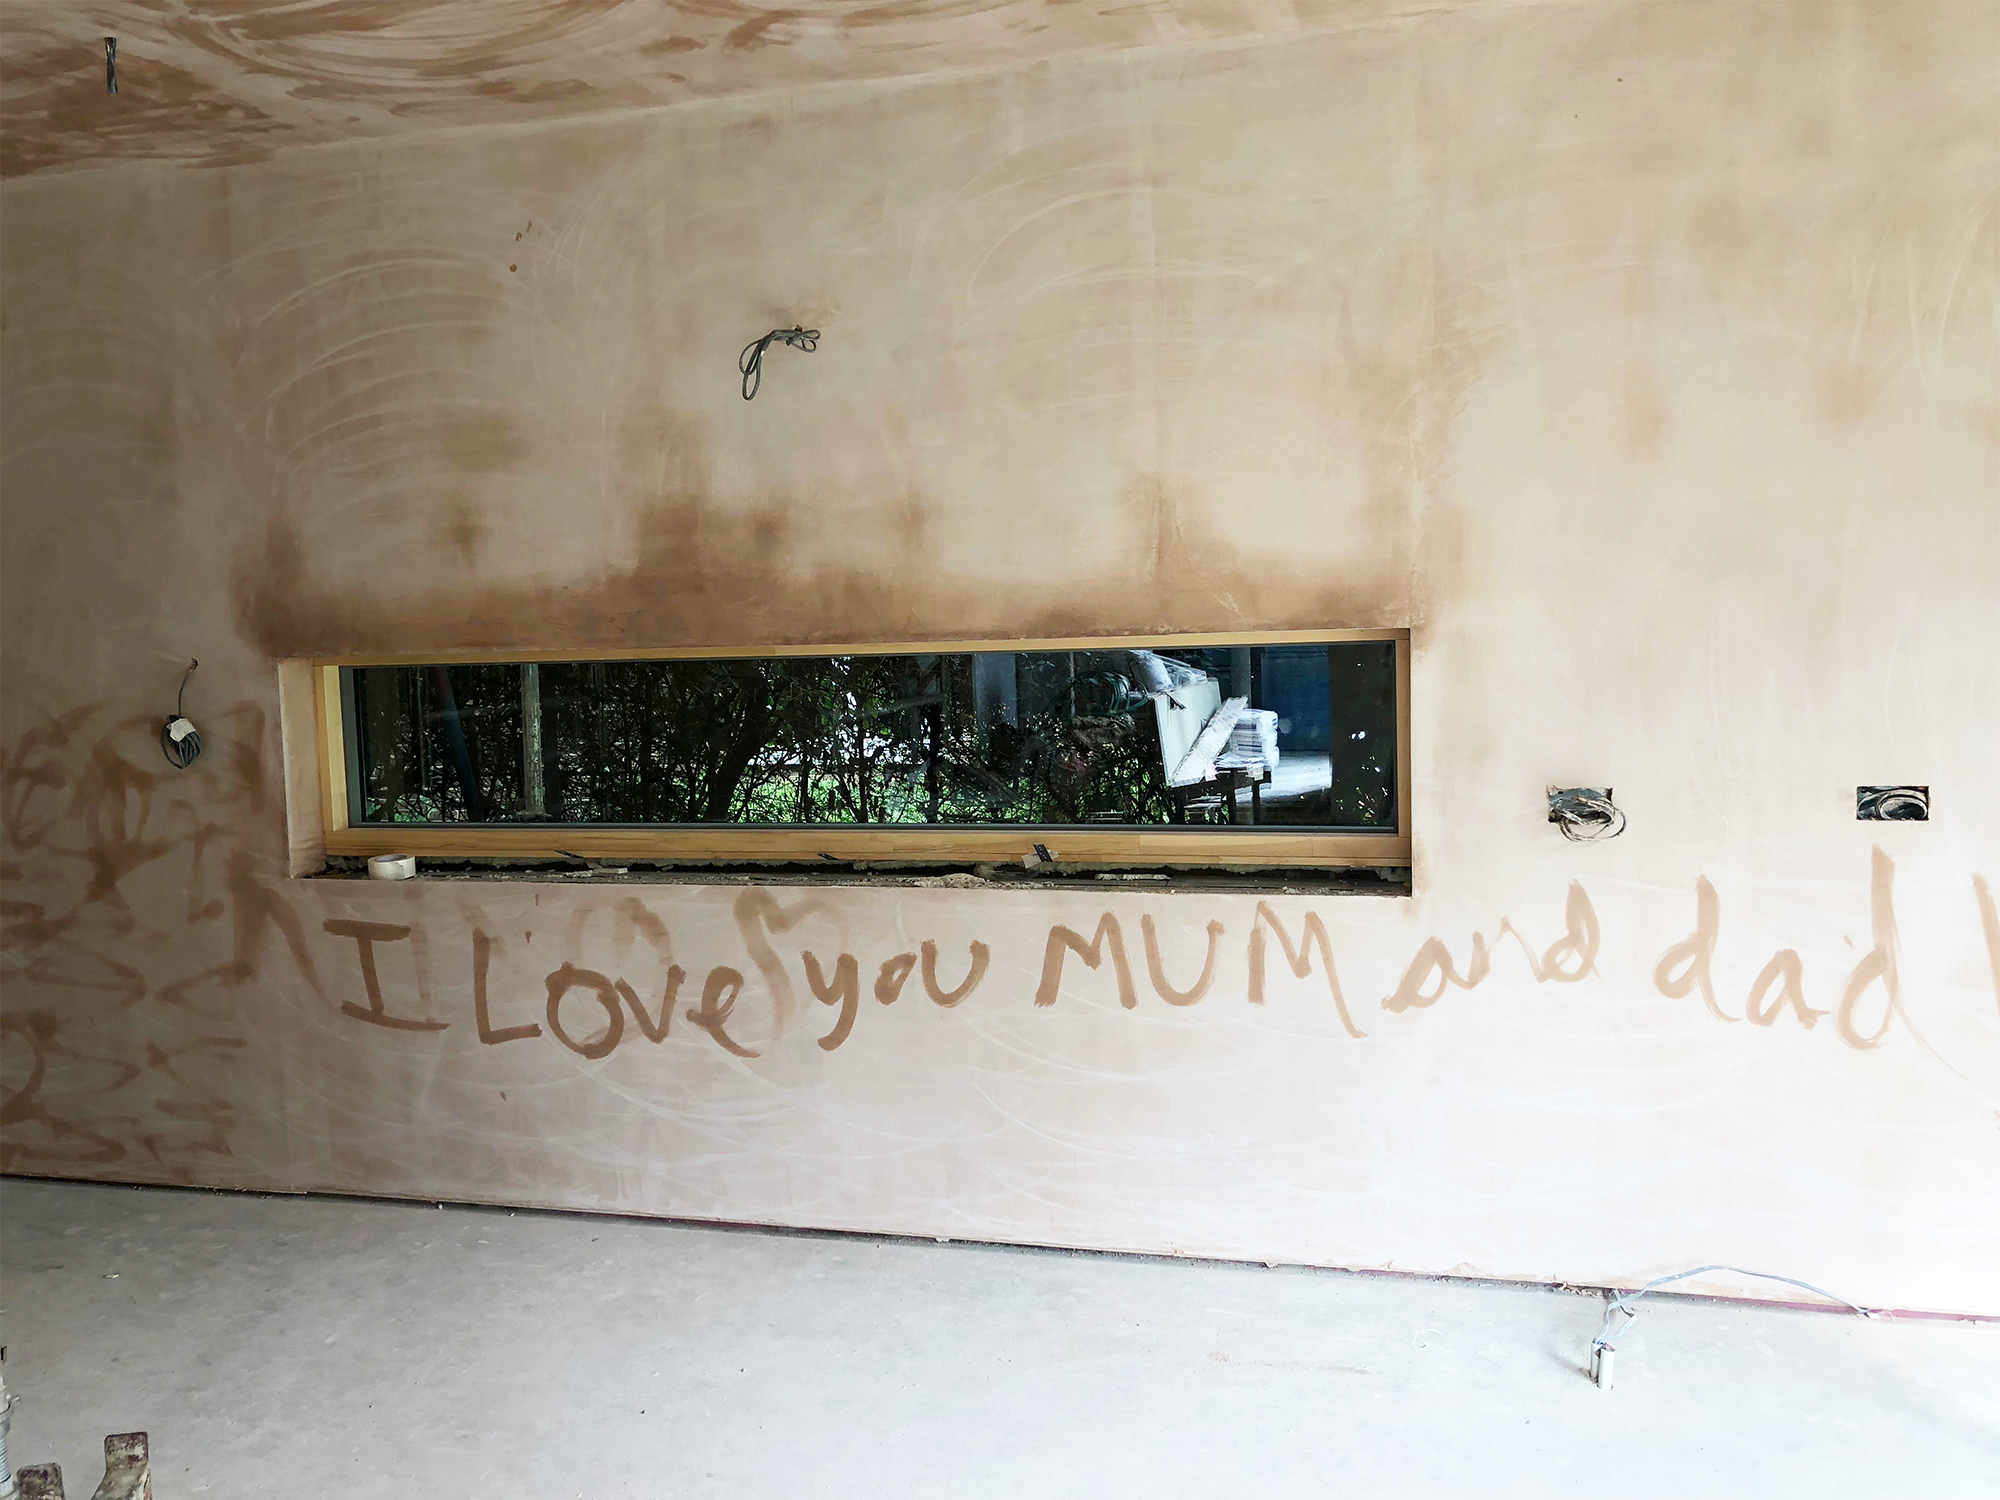 I love you mum written on plastered walls